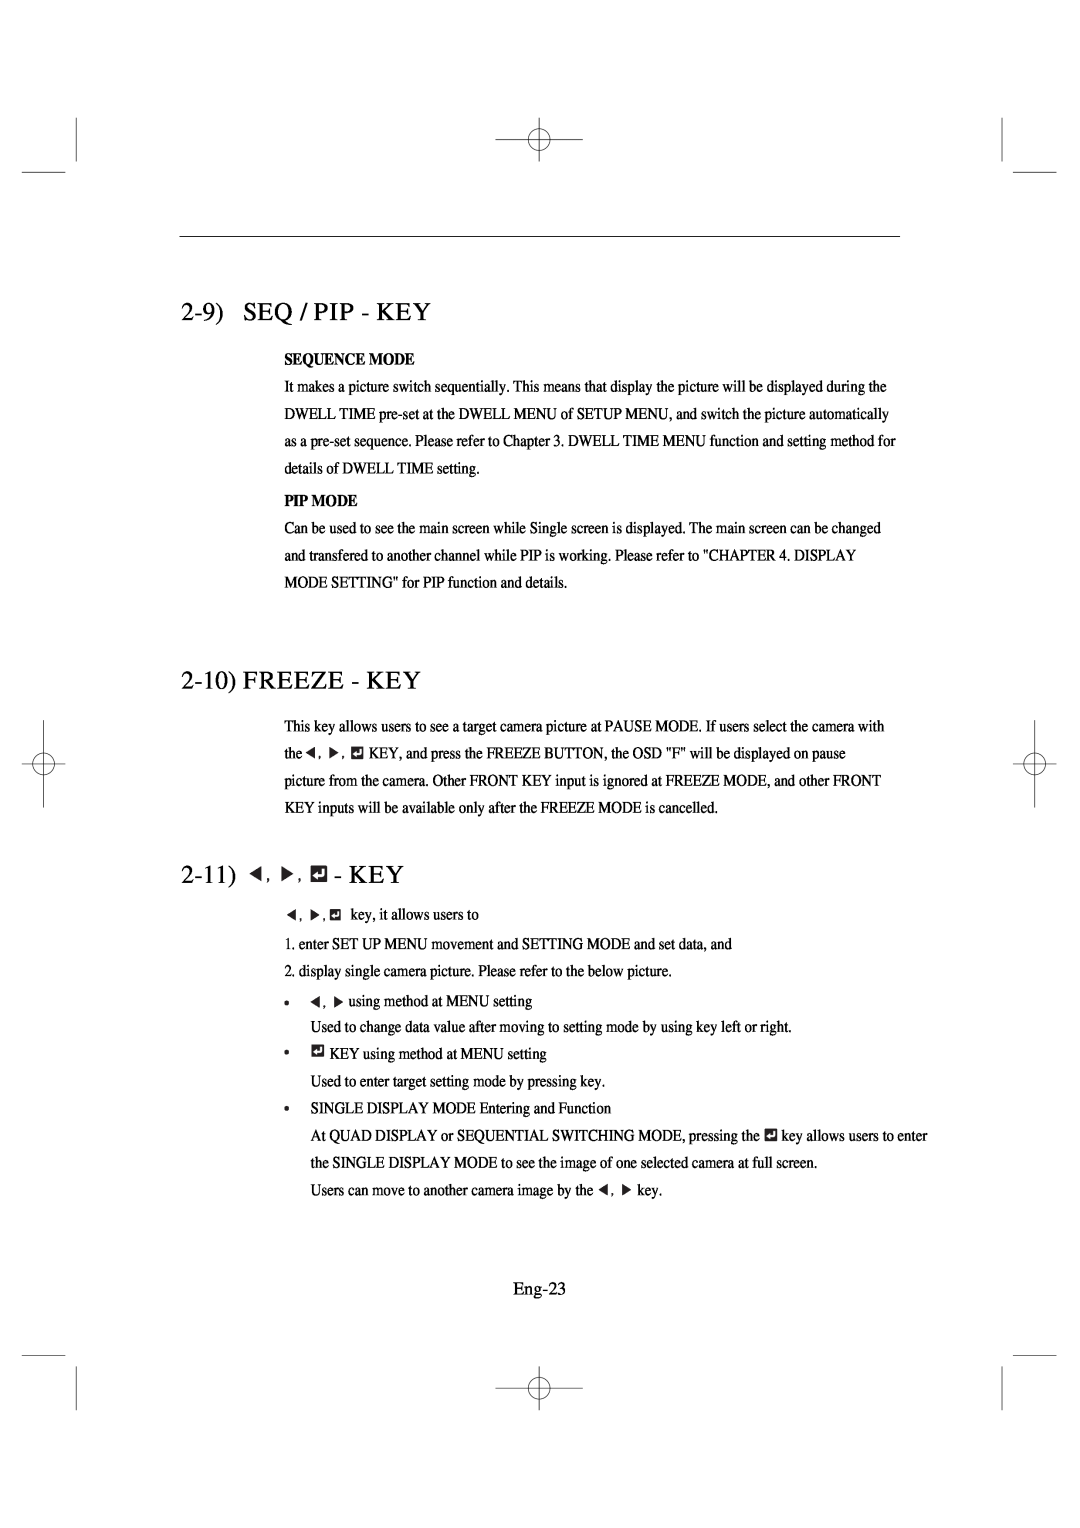 Samsung SSC17WEB manual 2-9SEQ / PIP - KEY, 2-10FREEZE - KEY, Key, Sequence Mode, Pip Mode 